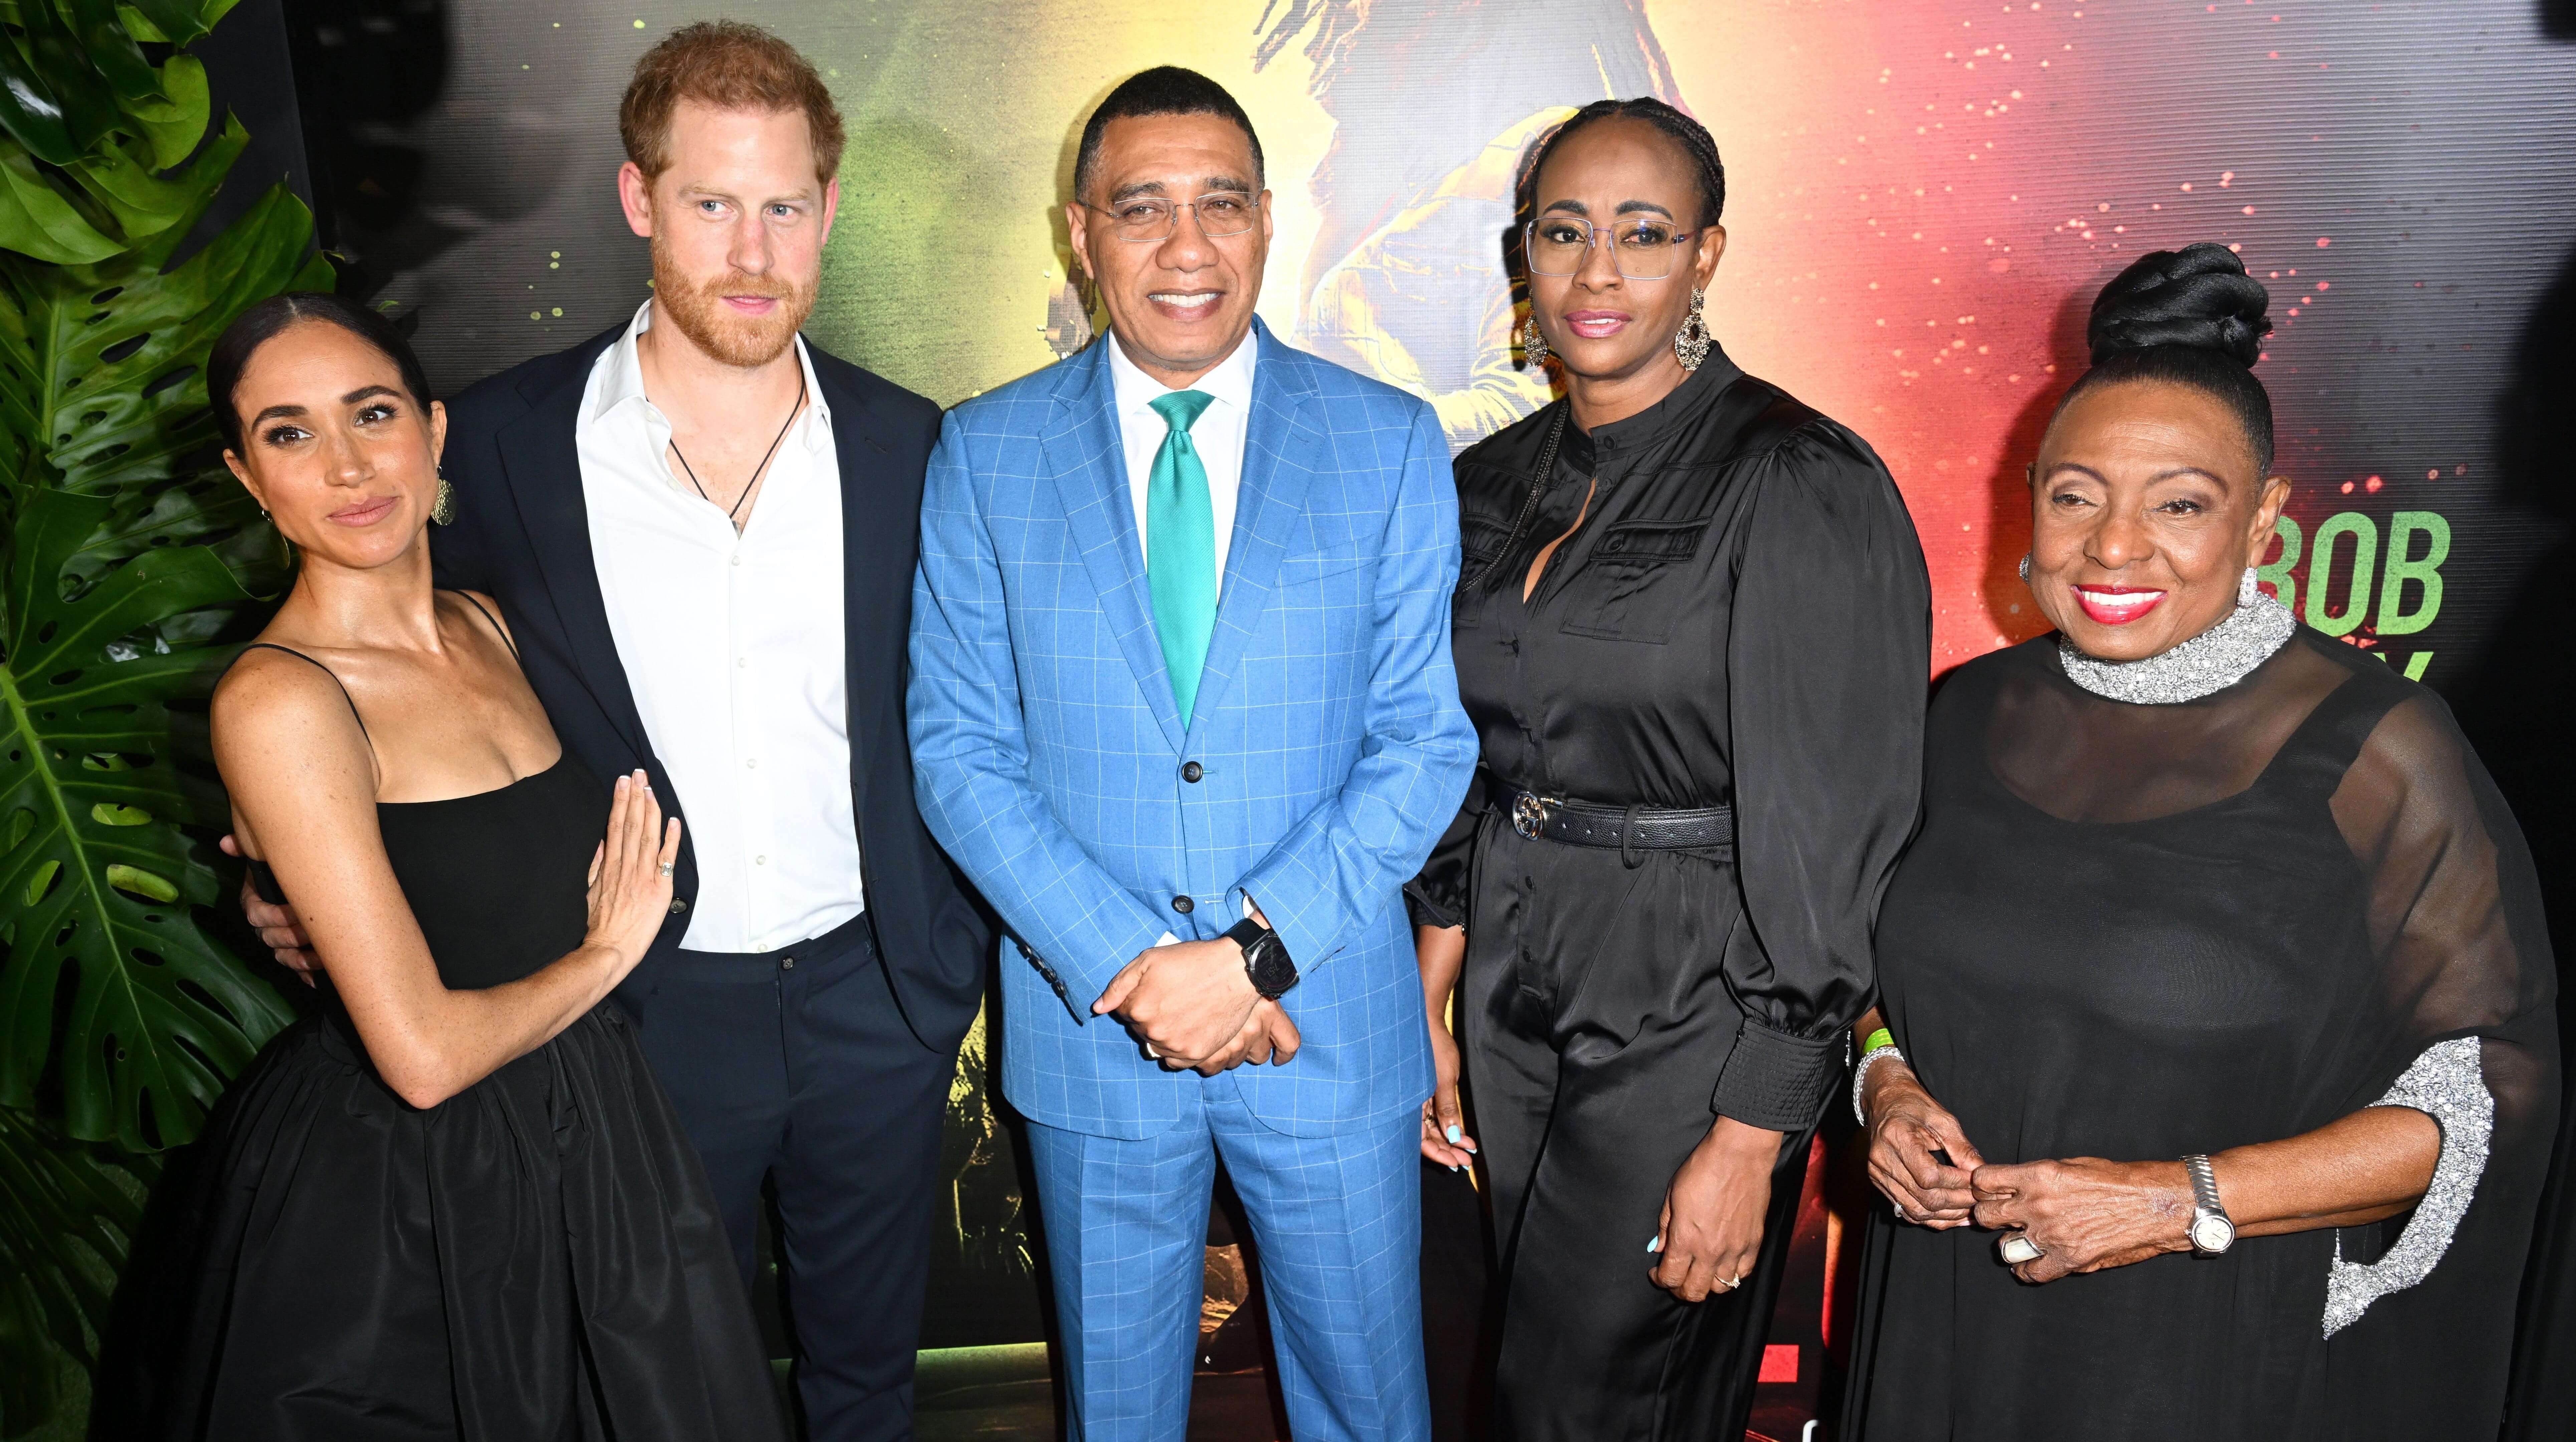 Bob Marley movie gets a Meghan Markle-Prince Harry boost